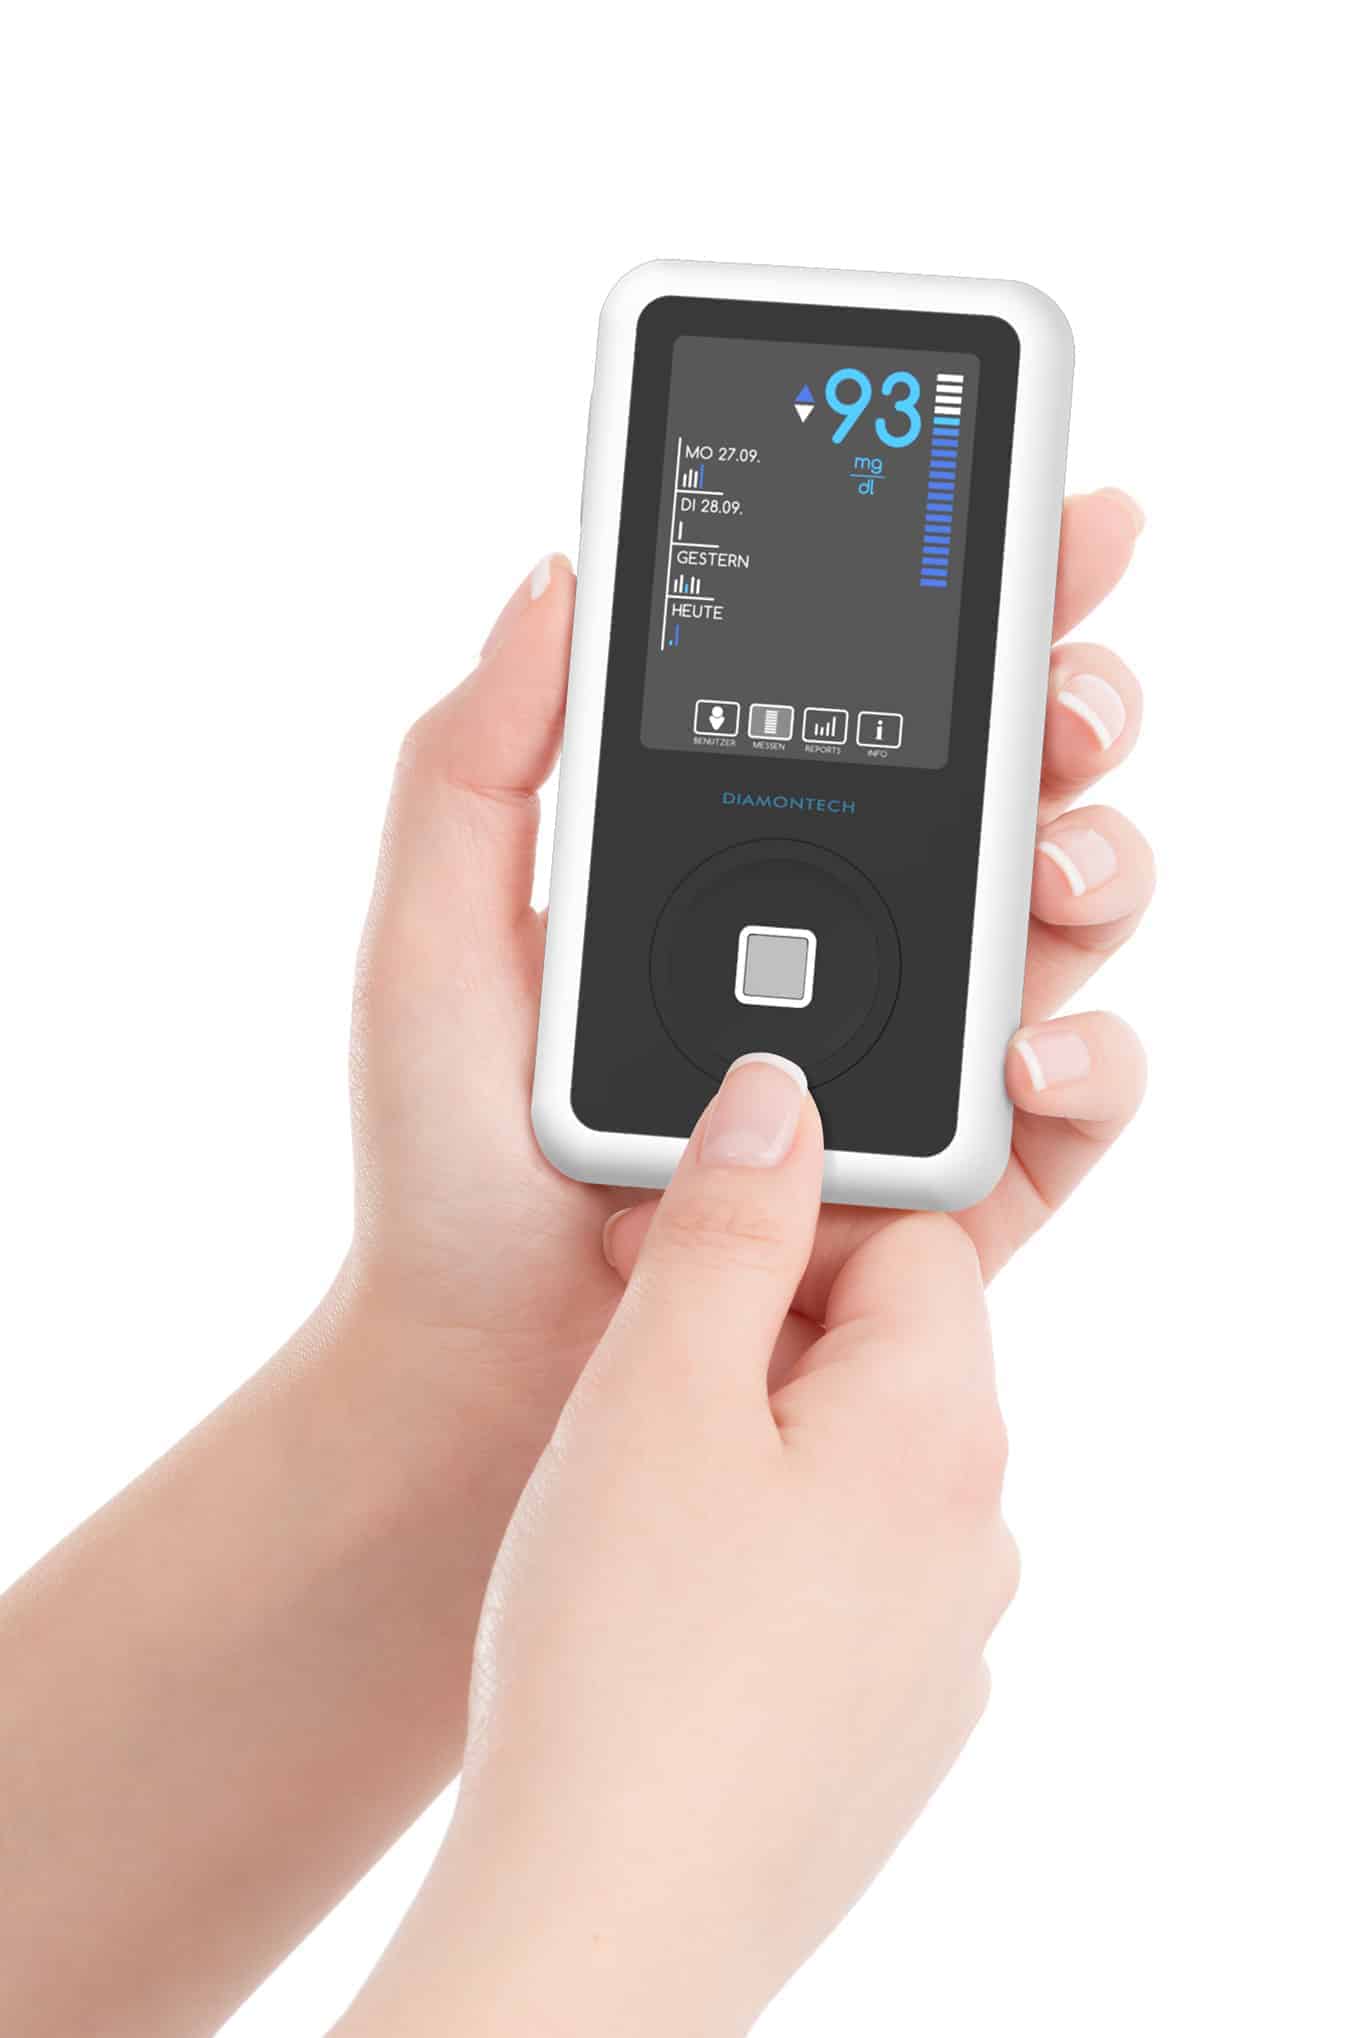 contour blood glucose meter